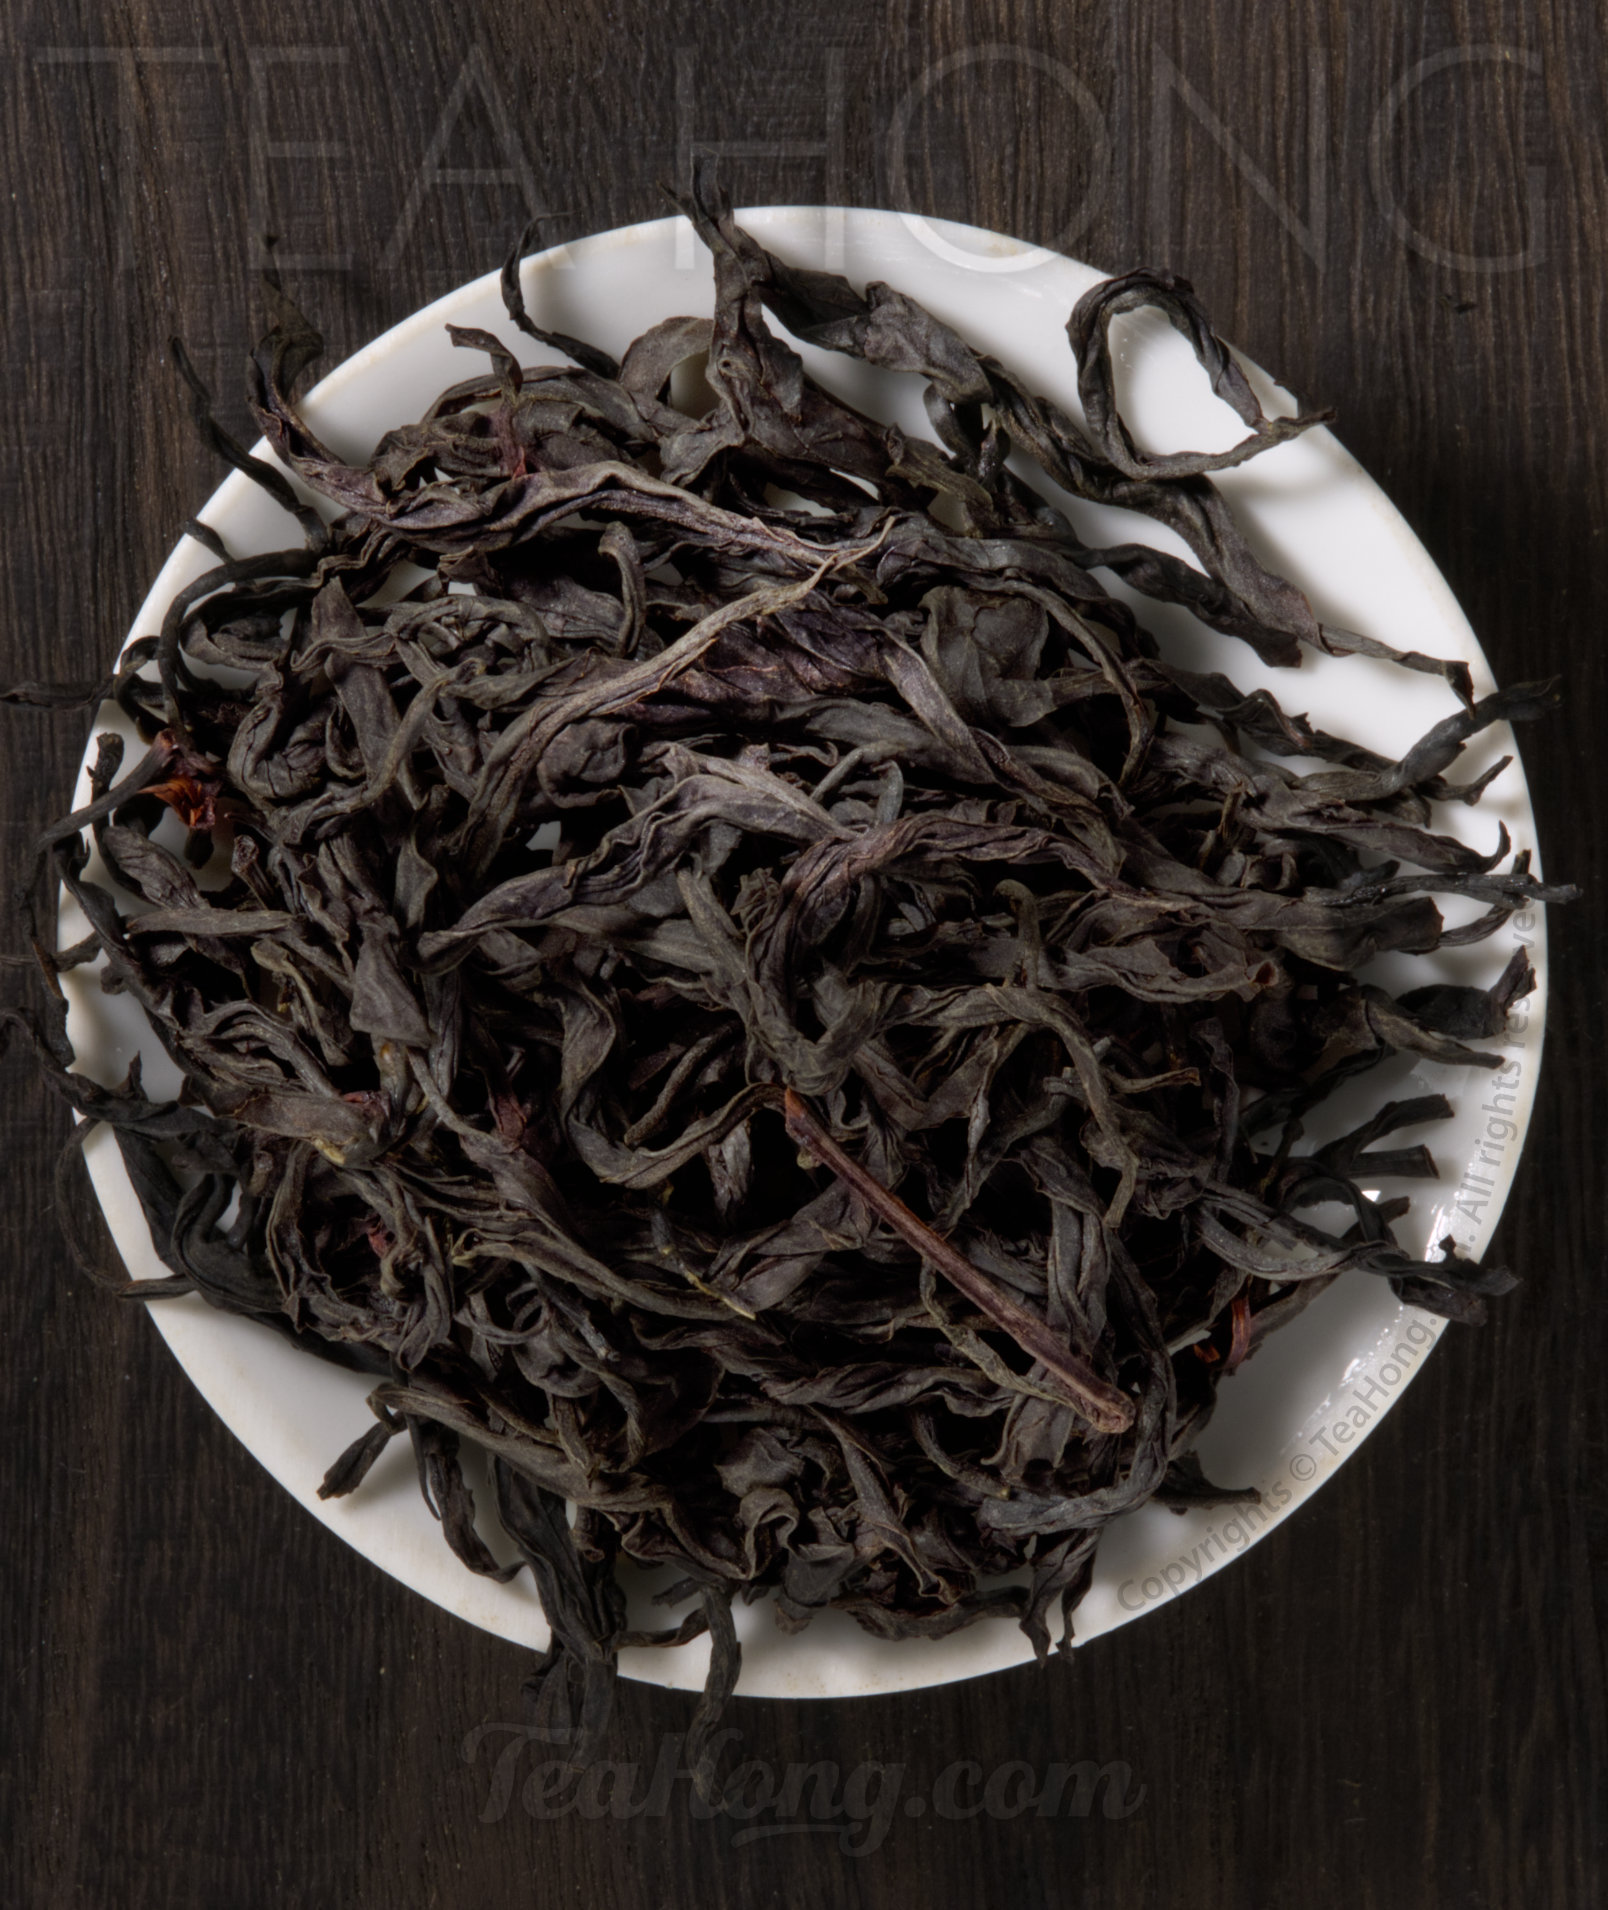 Red Jade, Taiwan black tea of the TTES#18 cultivar